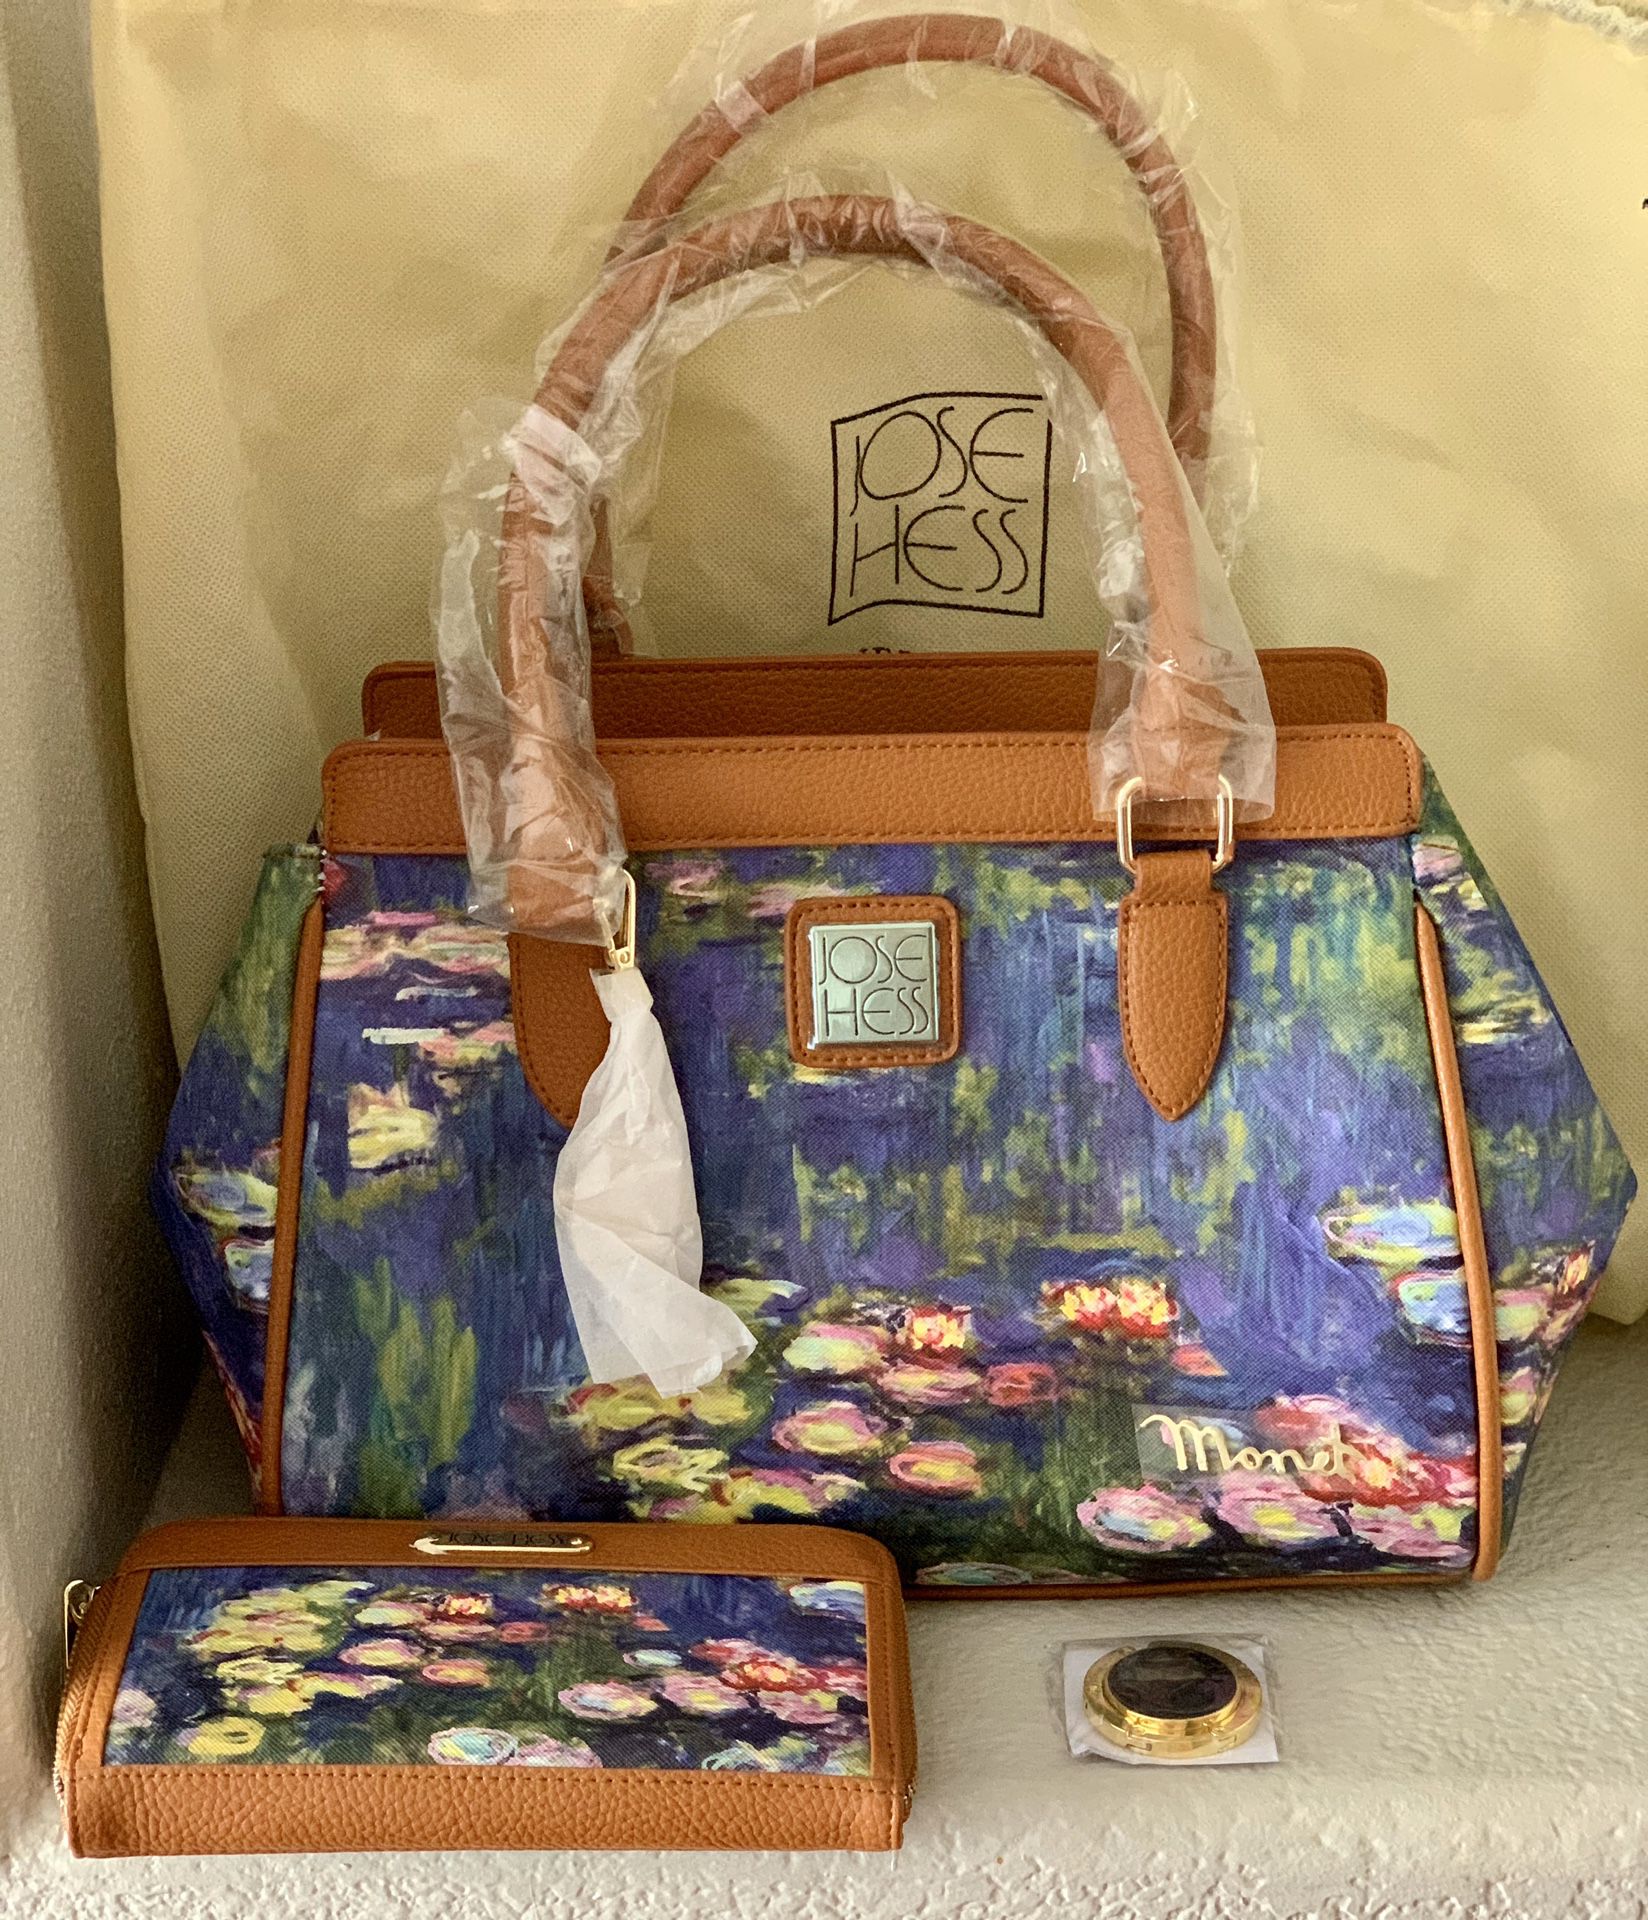 Brand New Jose Hess Water Lilies Handbag with wallet